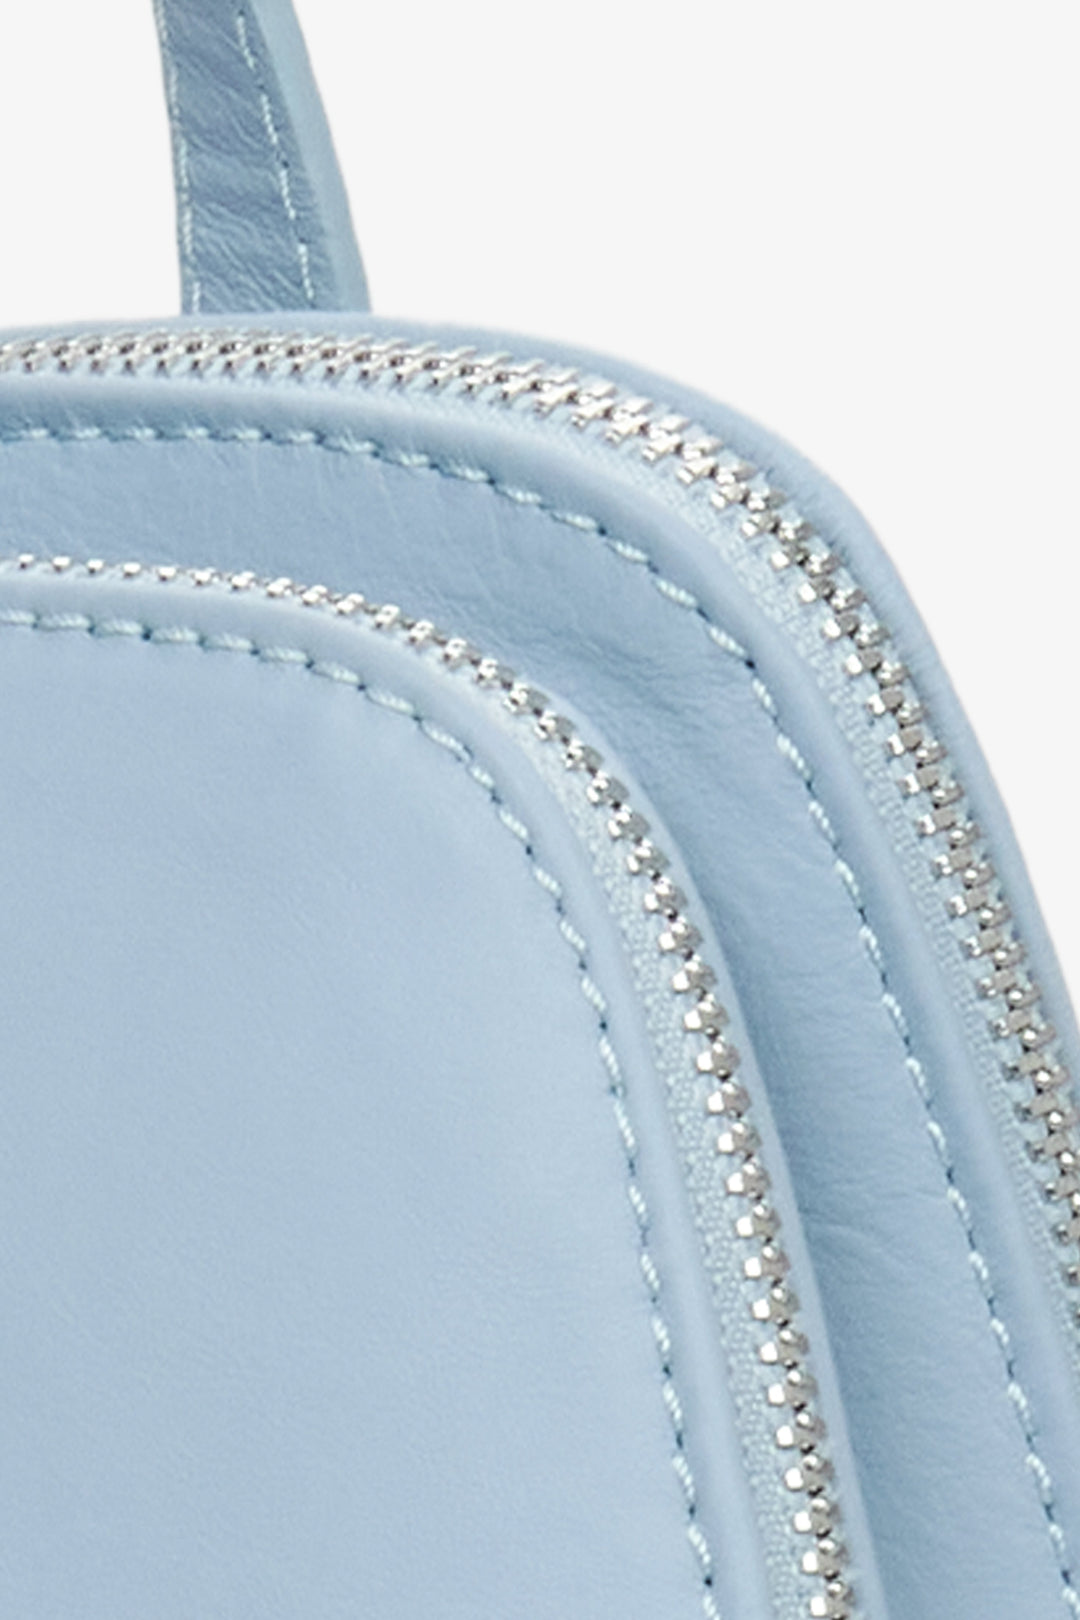 Jasnoniebieski plecak damski z włoskiej skóry naturalnej Estro - zbliżenie na detal.